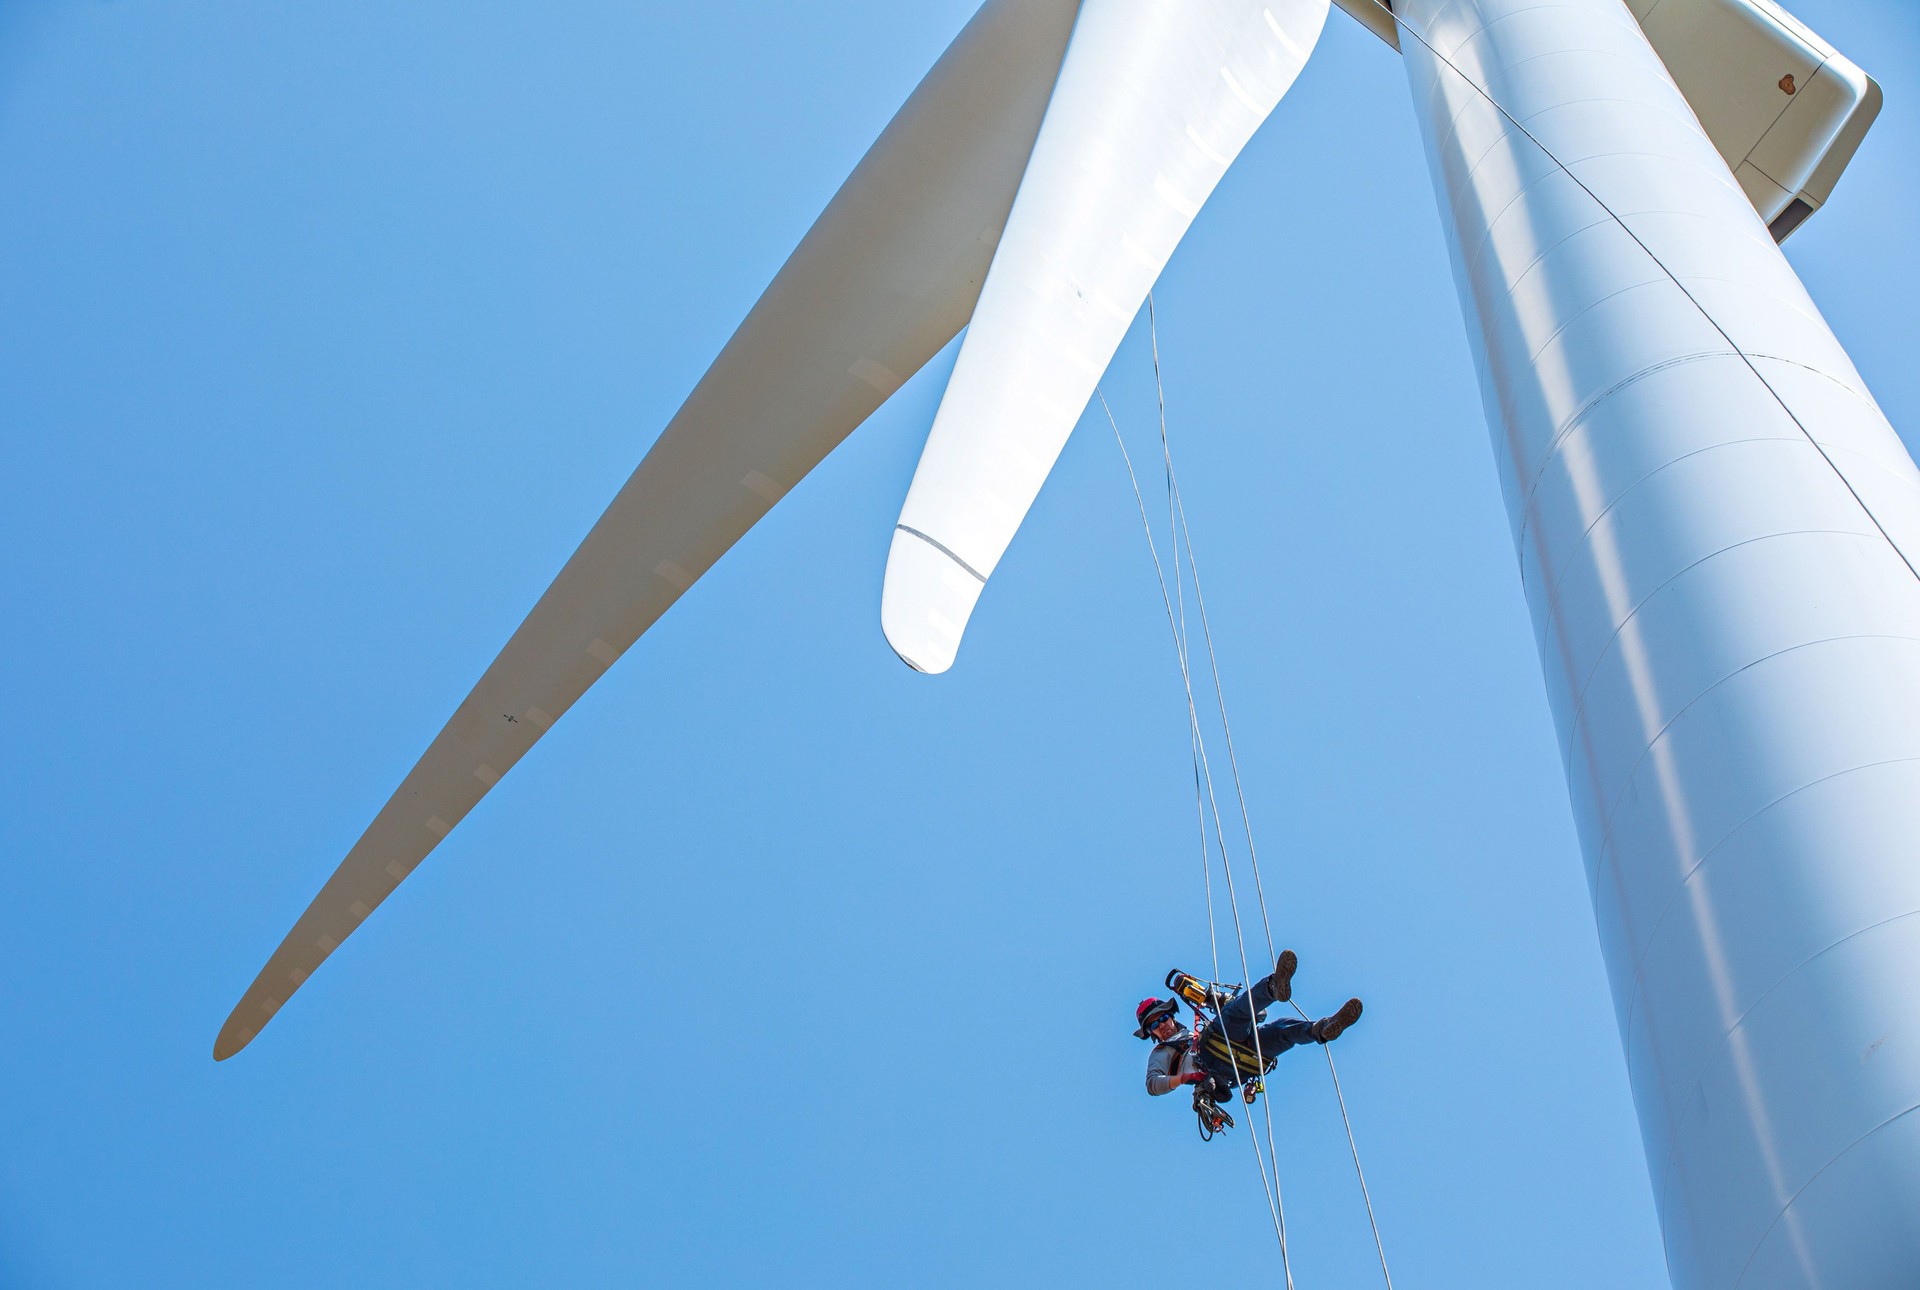 A technician checks a wind turbine at the National Renewable Energy Laboratory